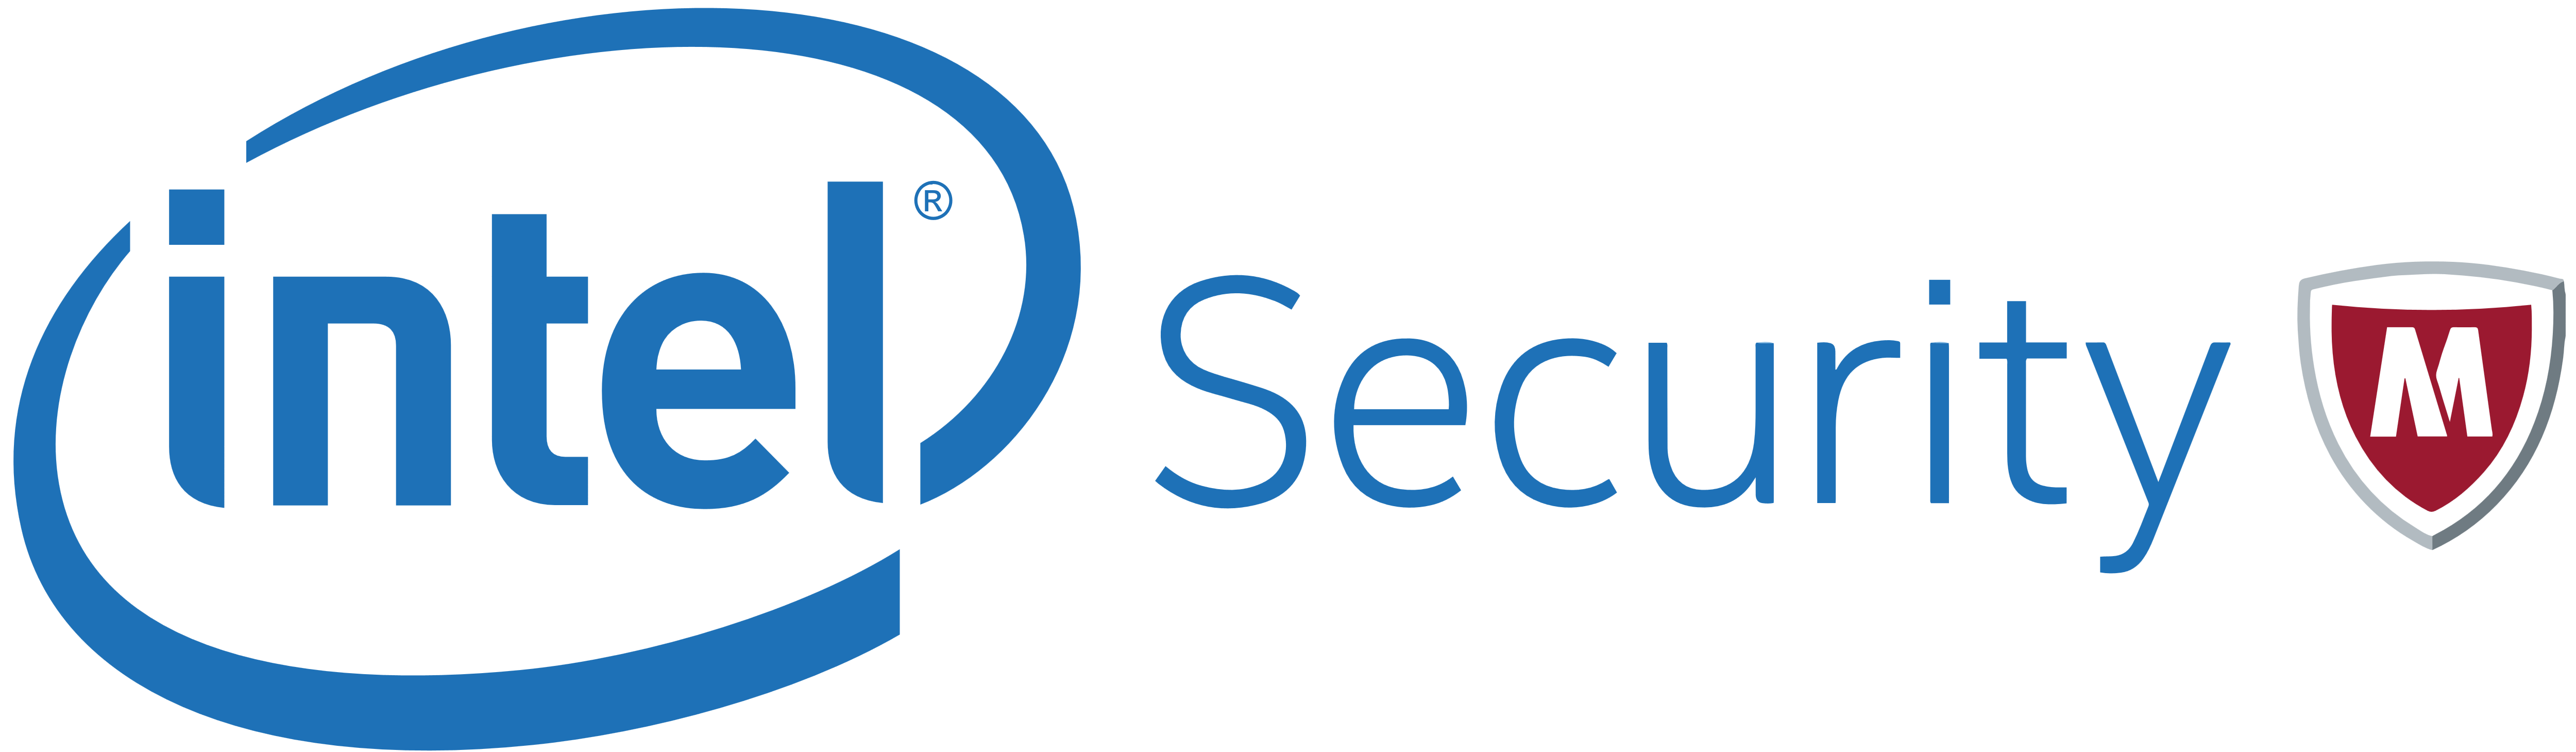 Intel Security Mcafee Logo, Logotype, Emblem   Intel Logotype Png - Exxonmobil Eps, Transparent background PNG HD thumbnail